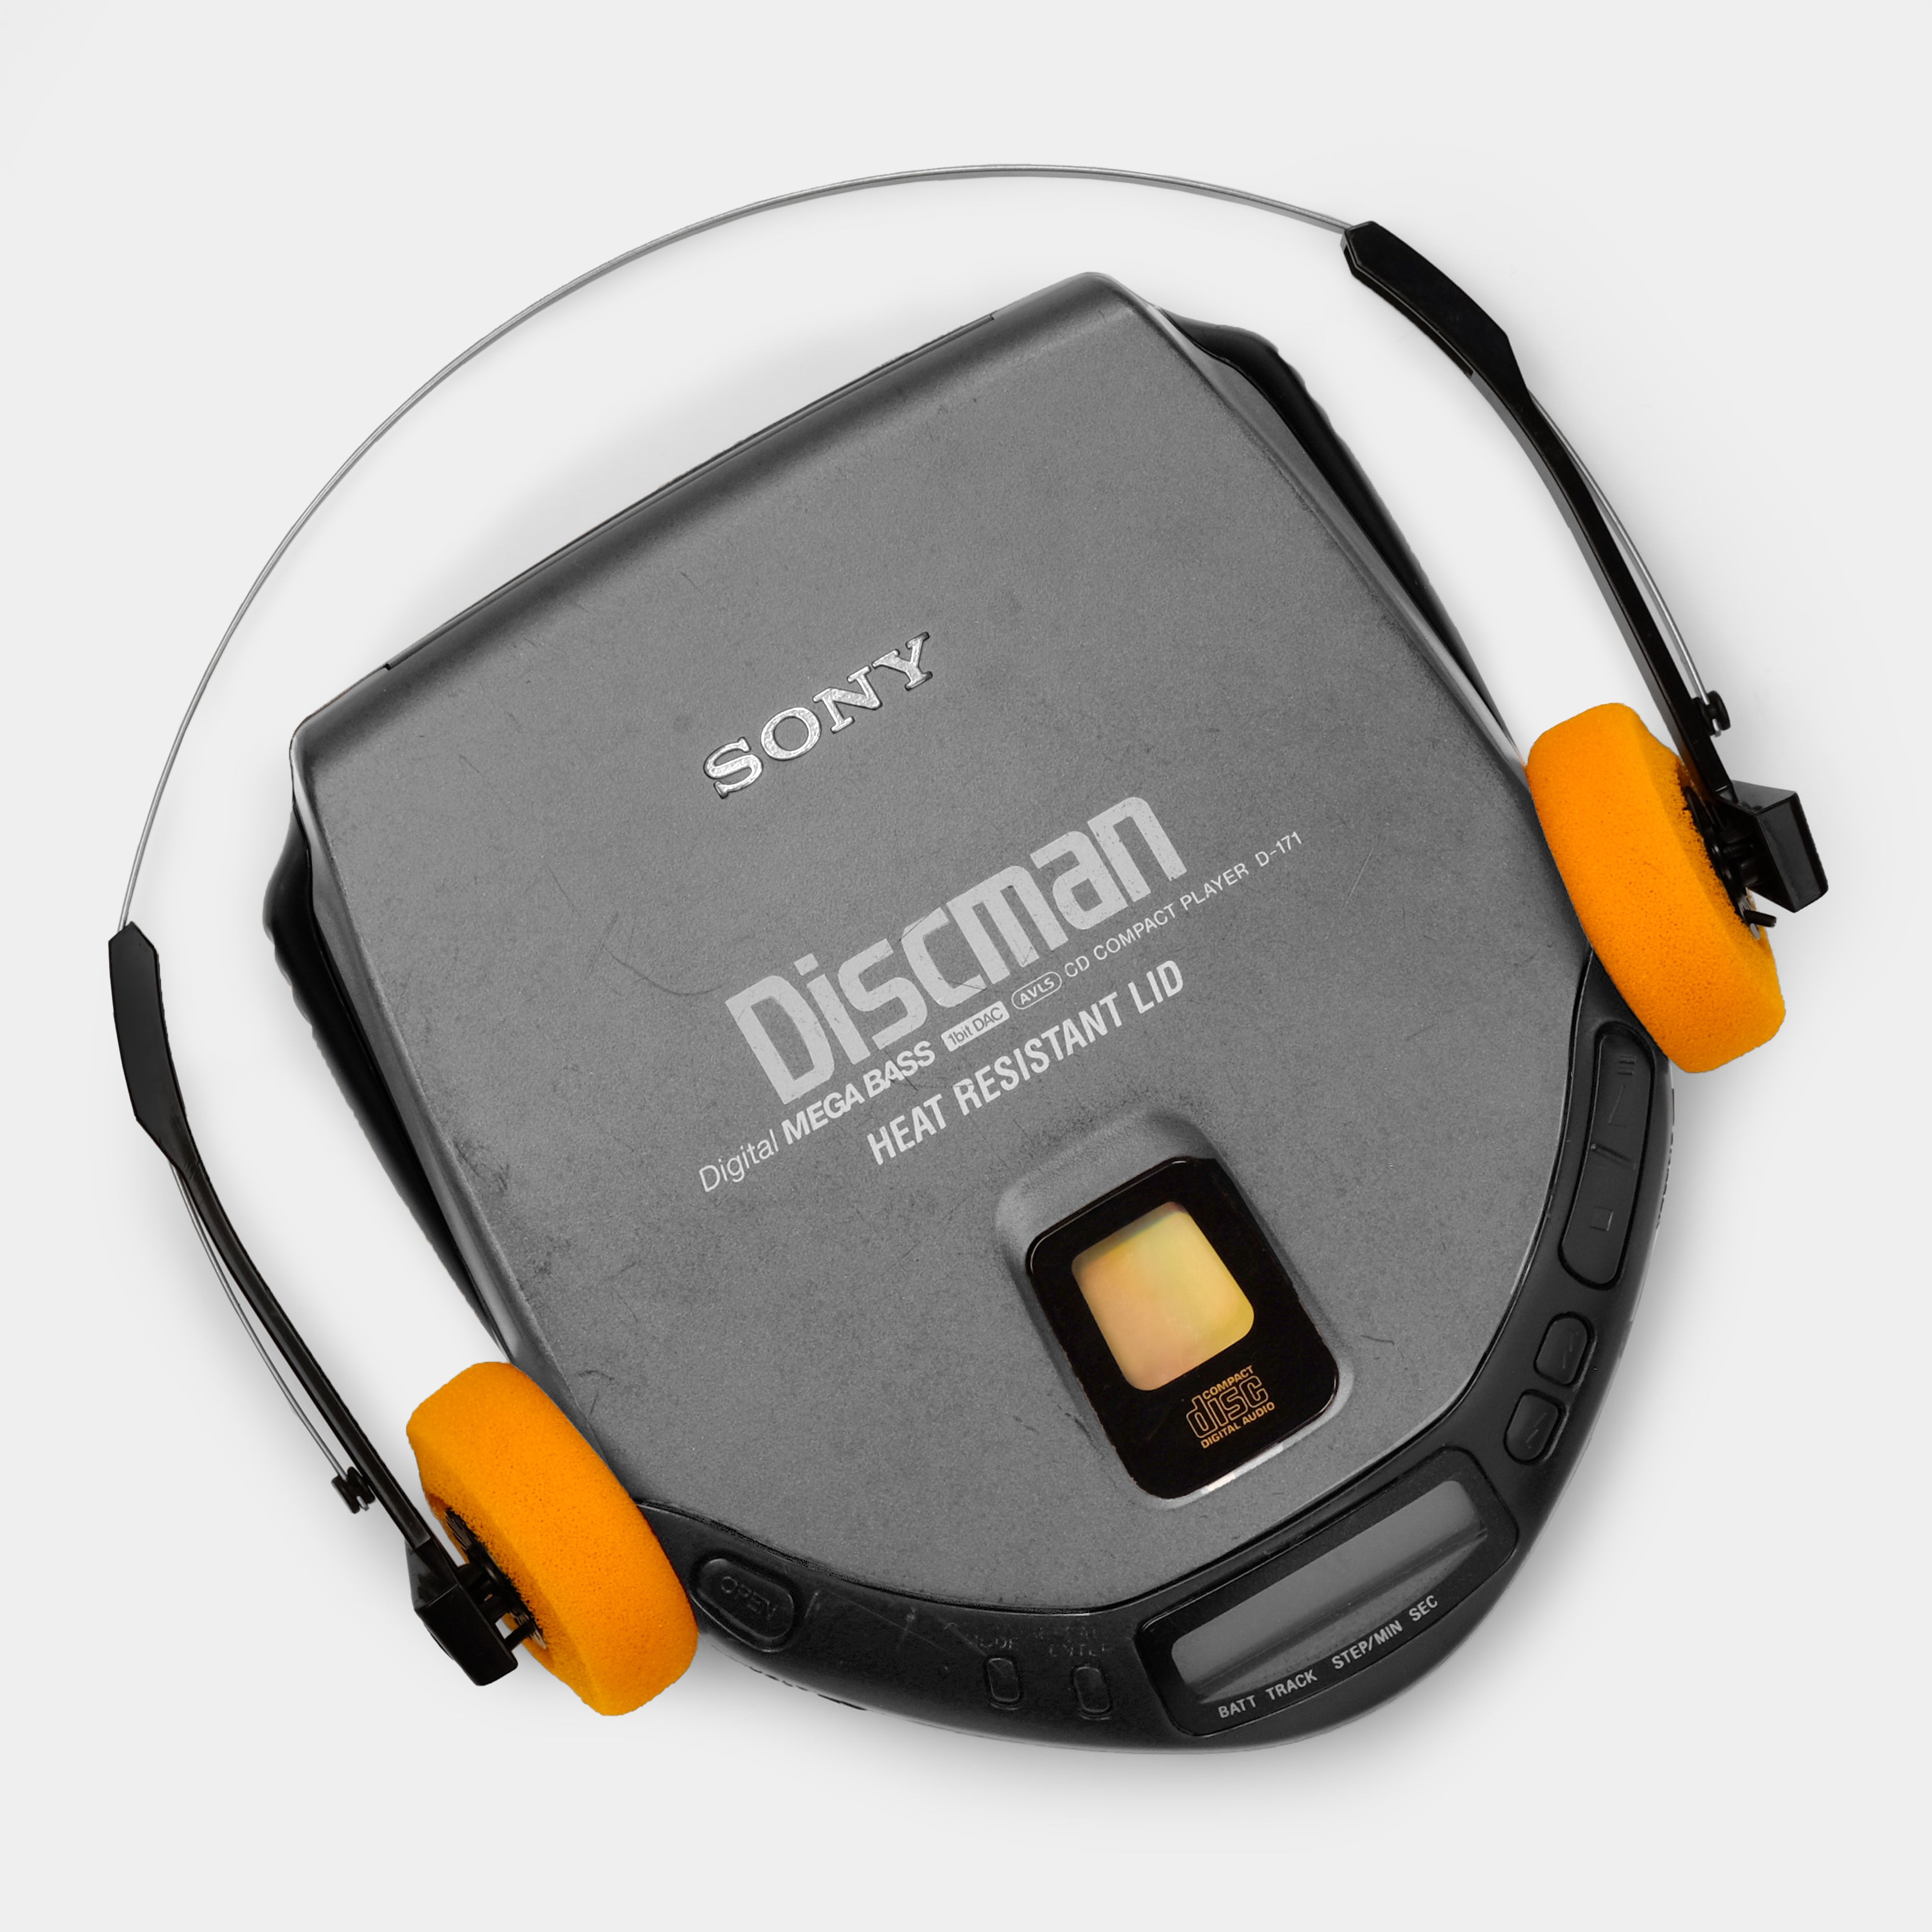 Sony Discman D-171 Portable CD Player